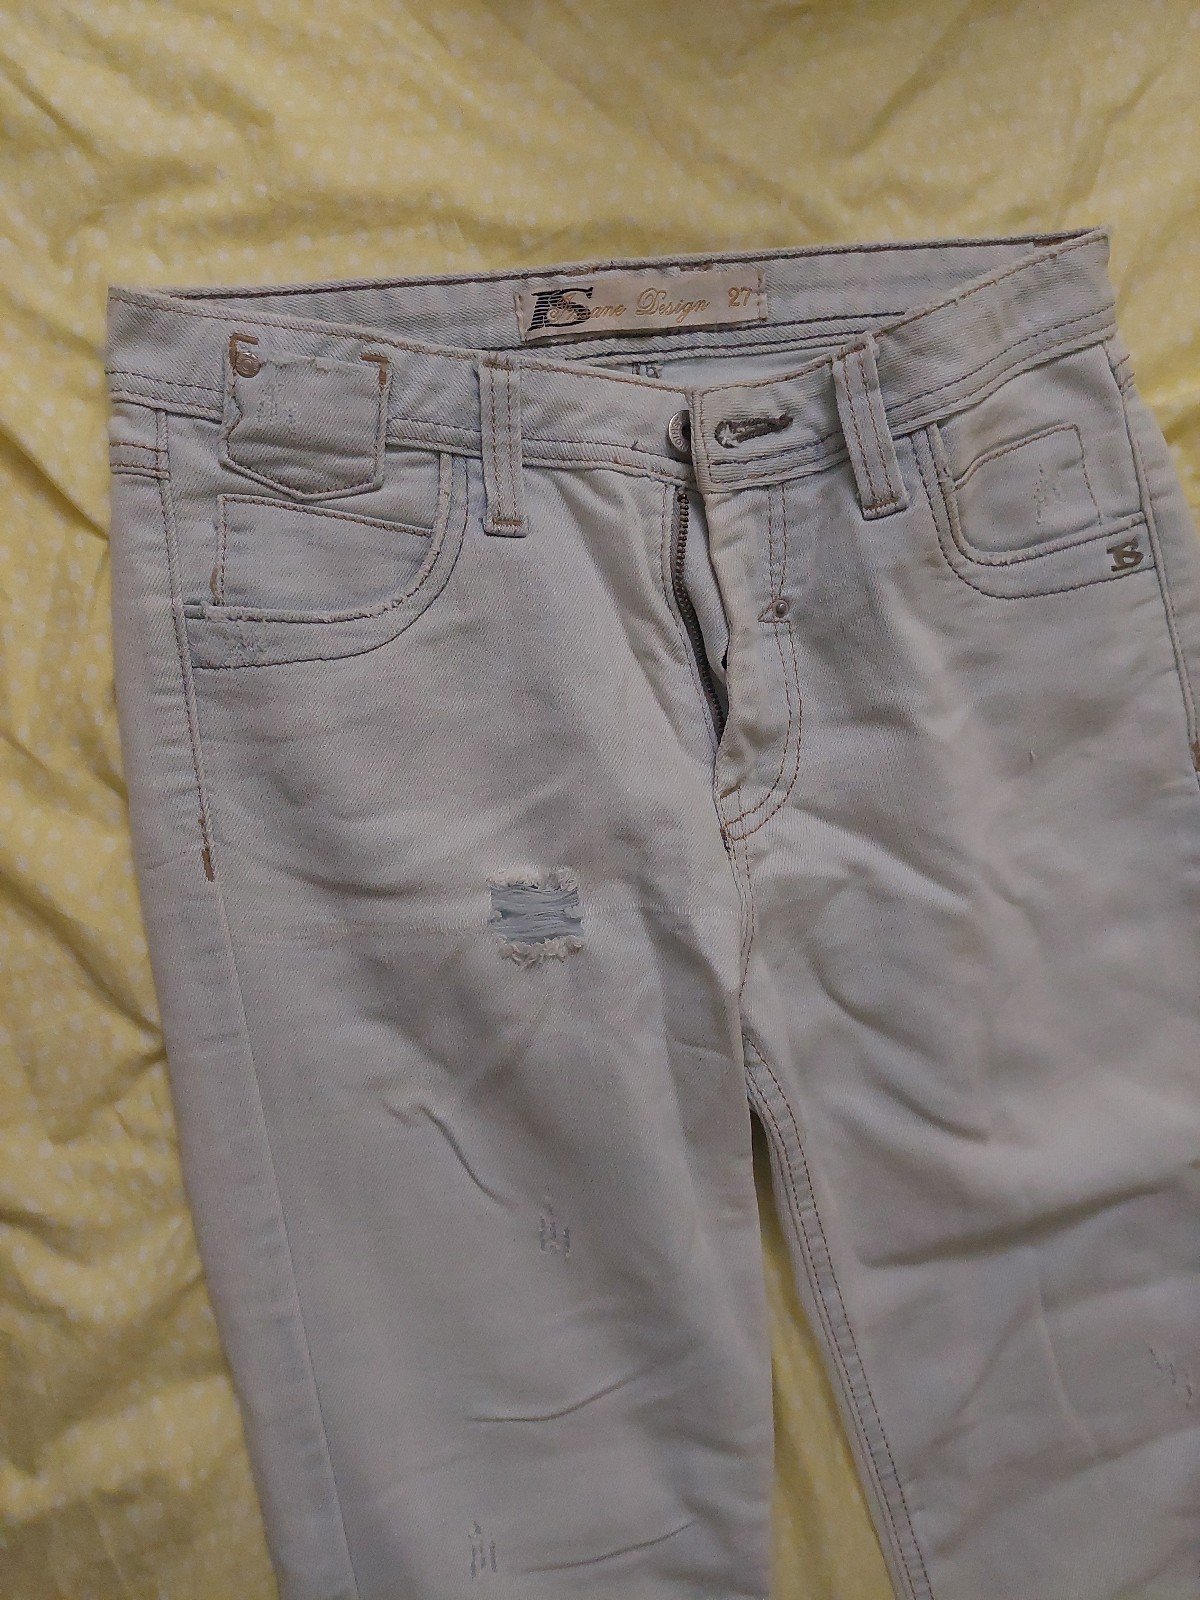 Nice pants skinny jeans osTZ91mbi Factory Price